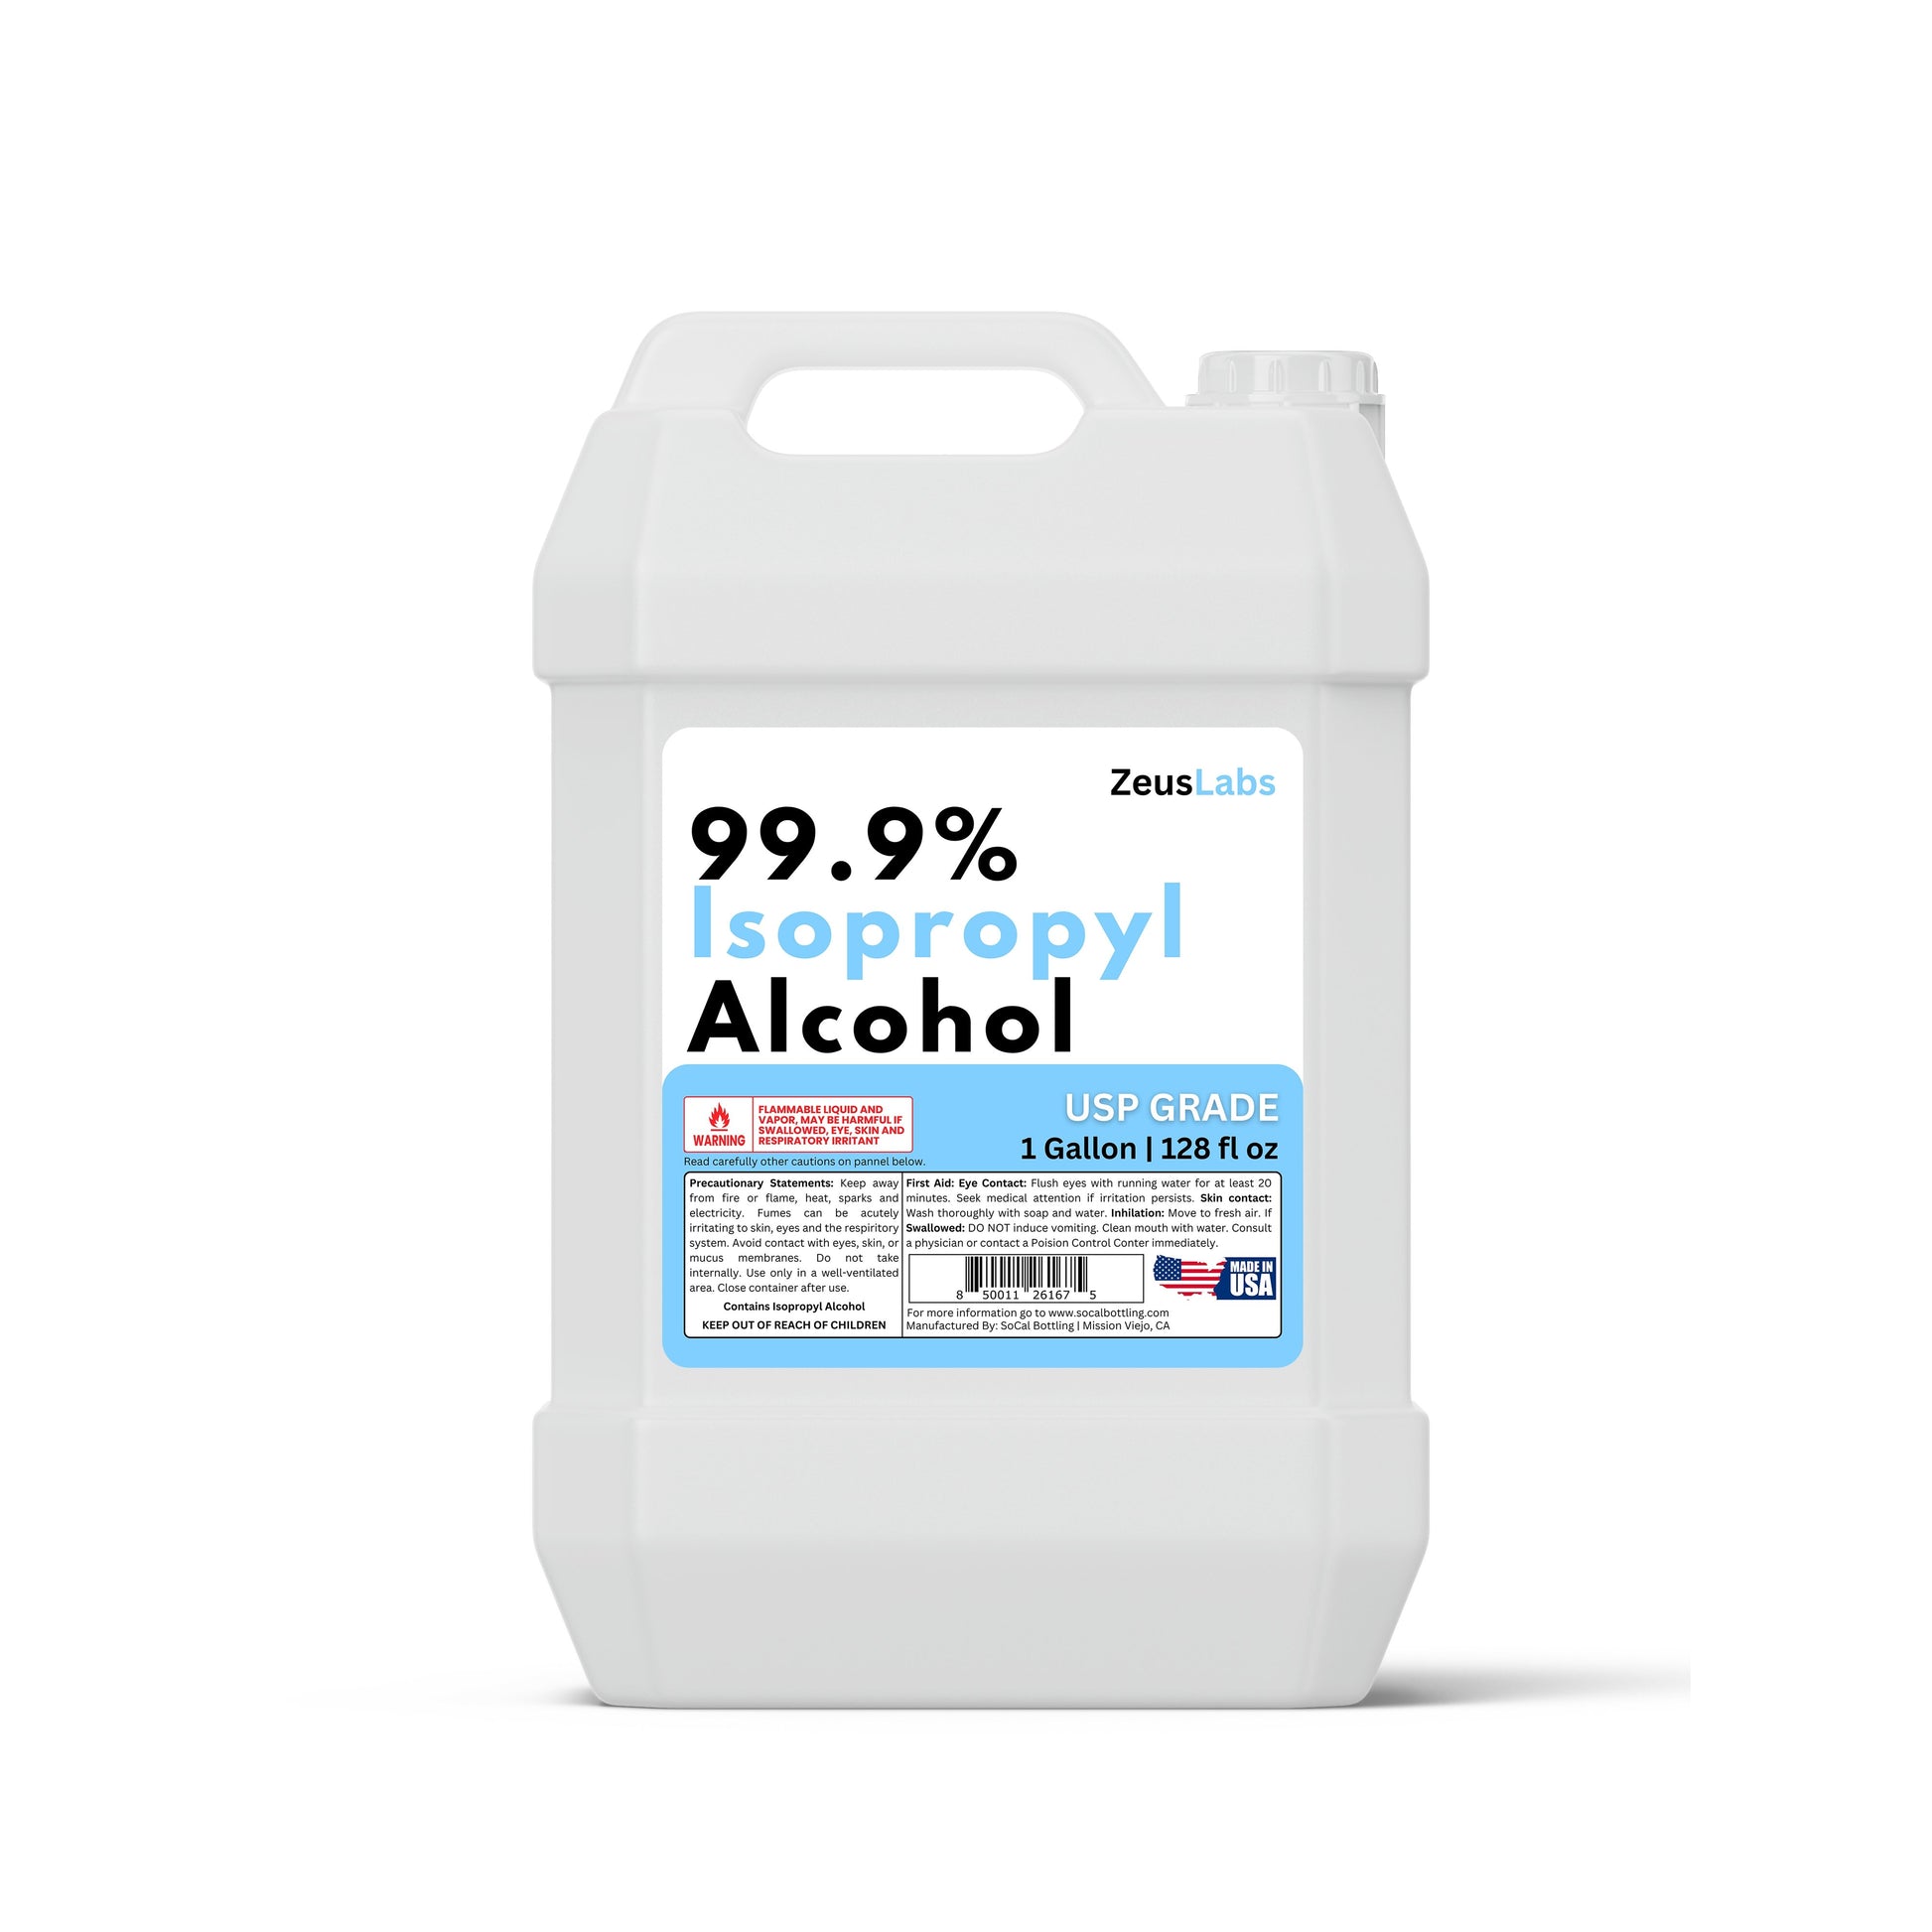 Isopropyl Alcohol 99.8% 500-ml